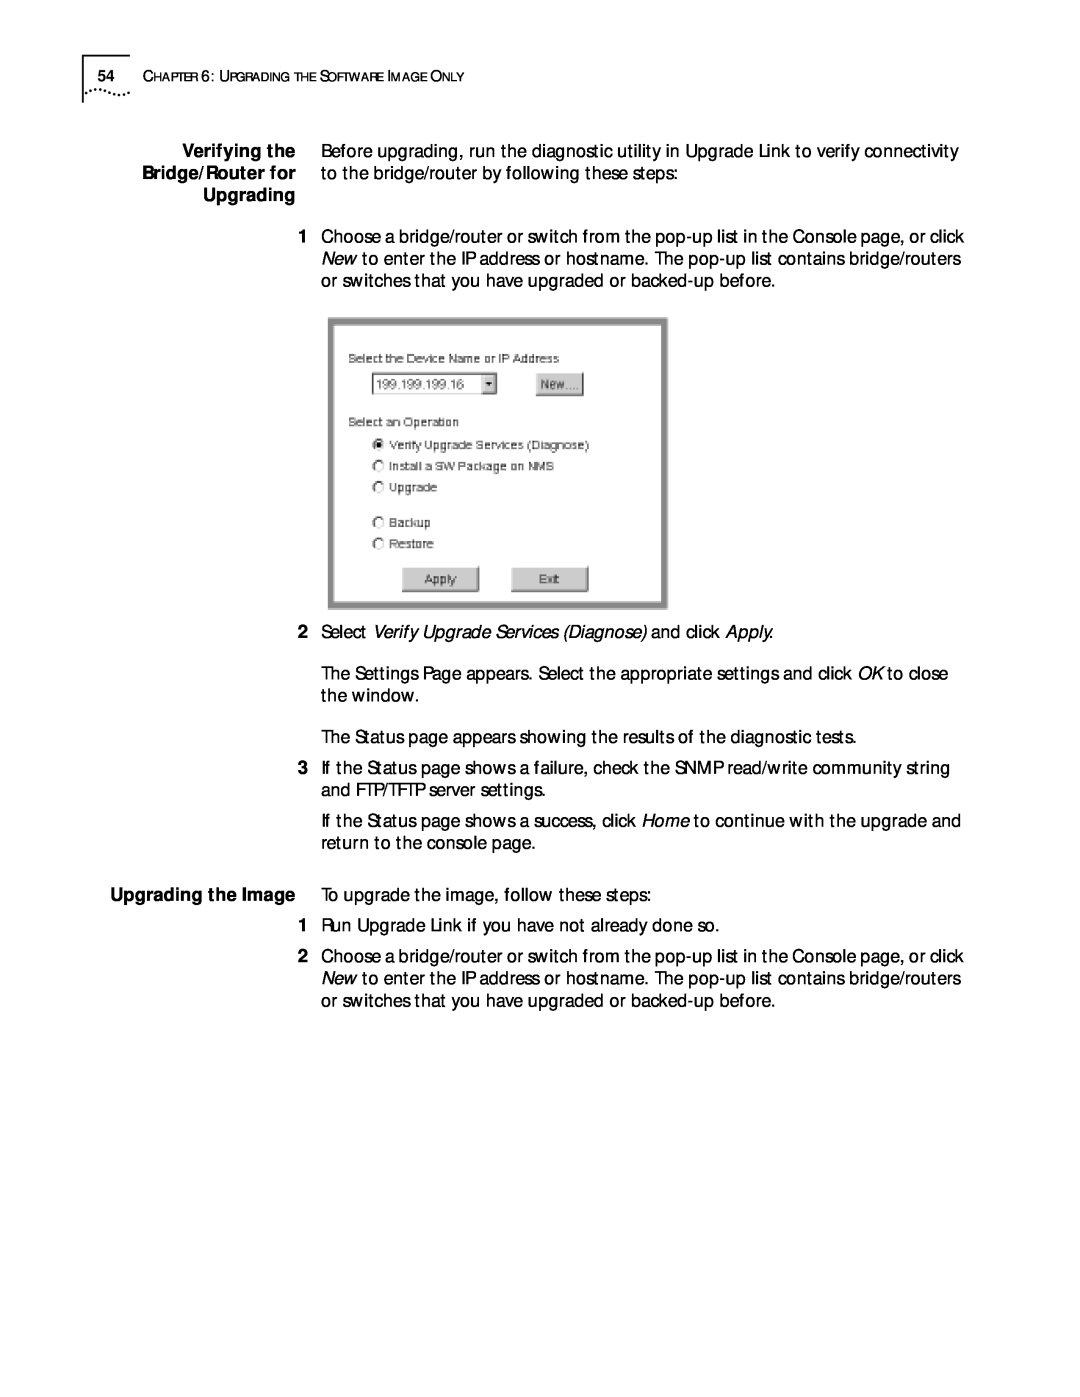 3Com ENTERPRISE OS 11.3 manual Upgrading, Select Verify Upgrade Services Diagnose and click Apply 